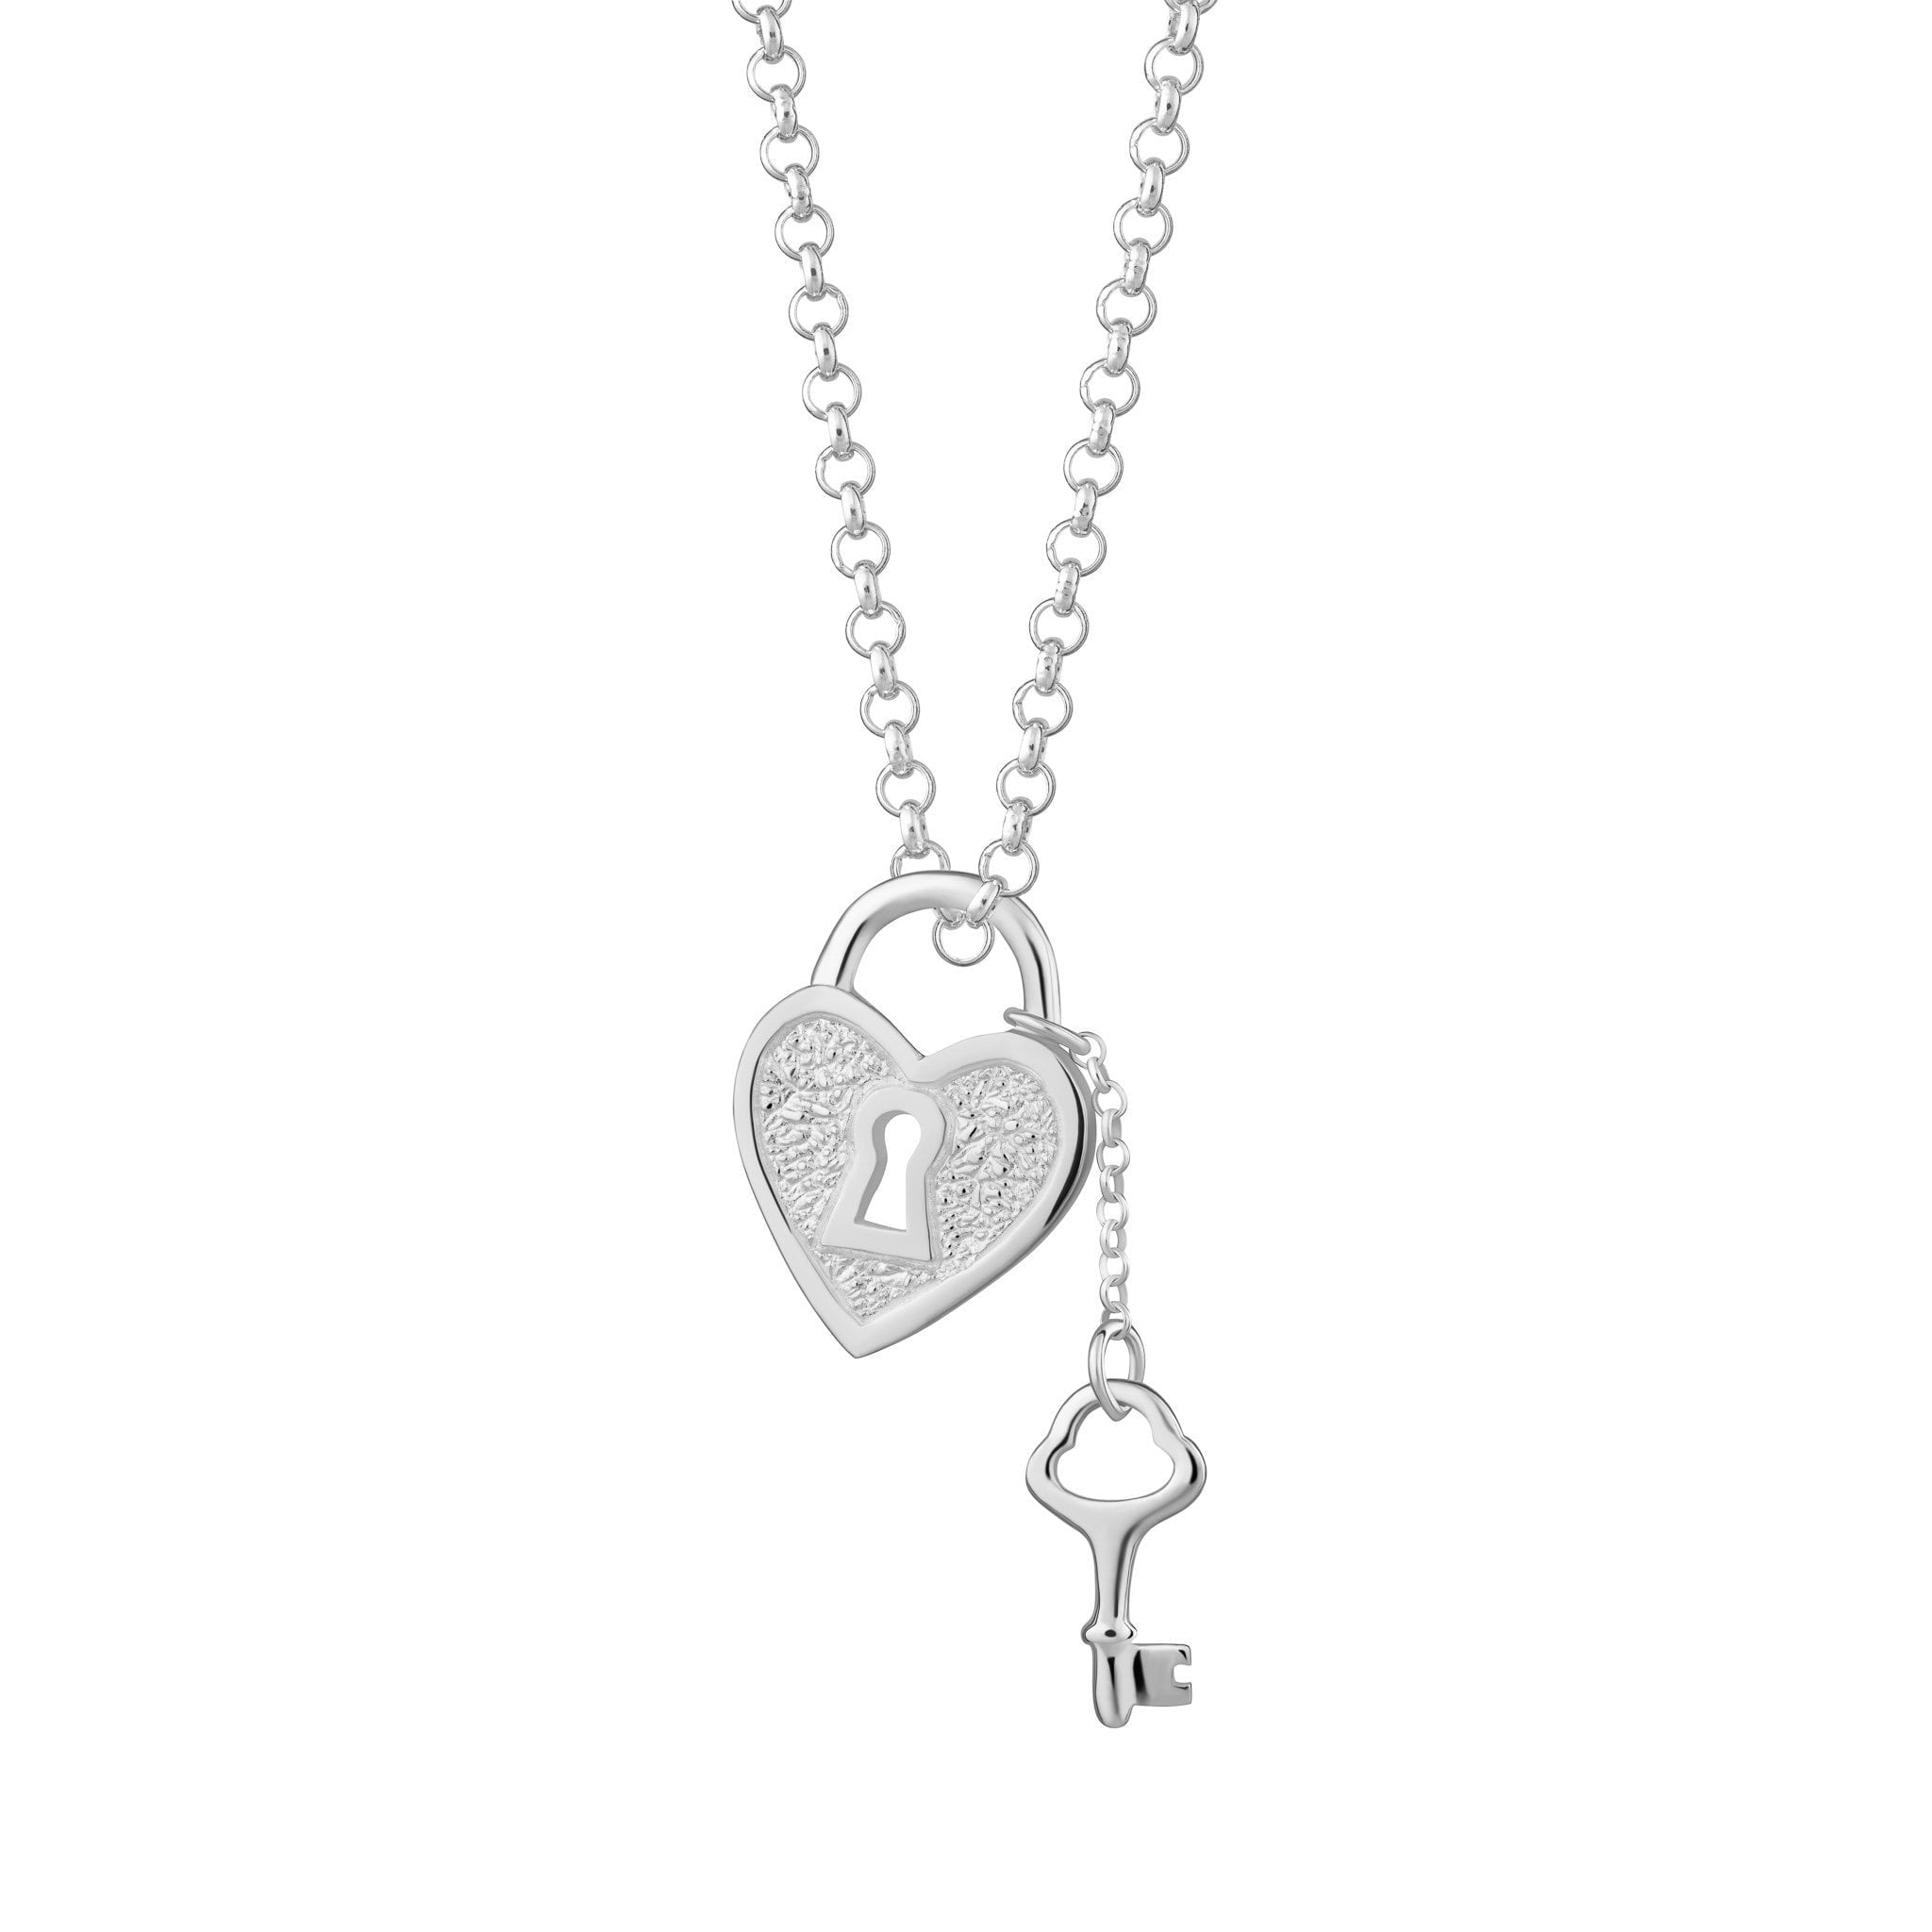 Heart Shaped Padlock and Key Necklace